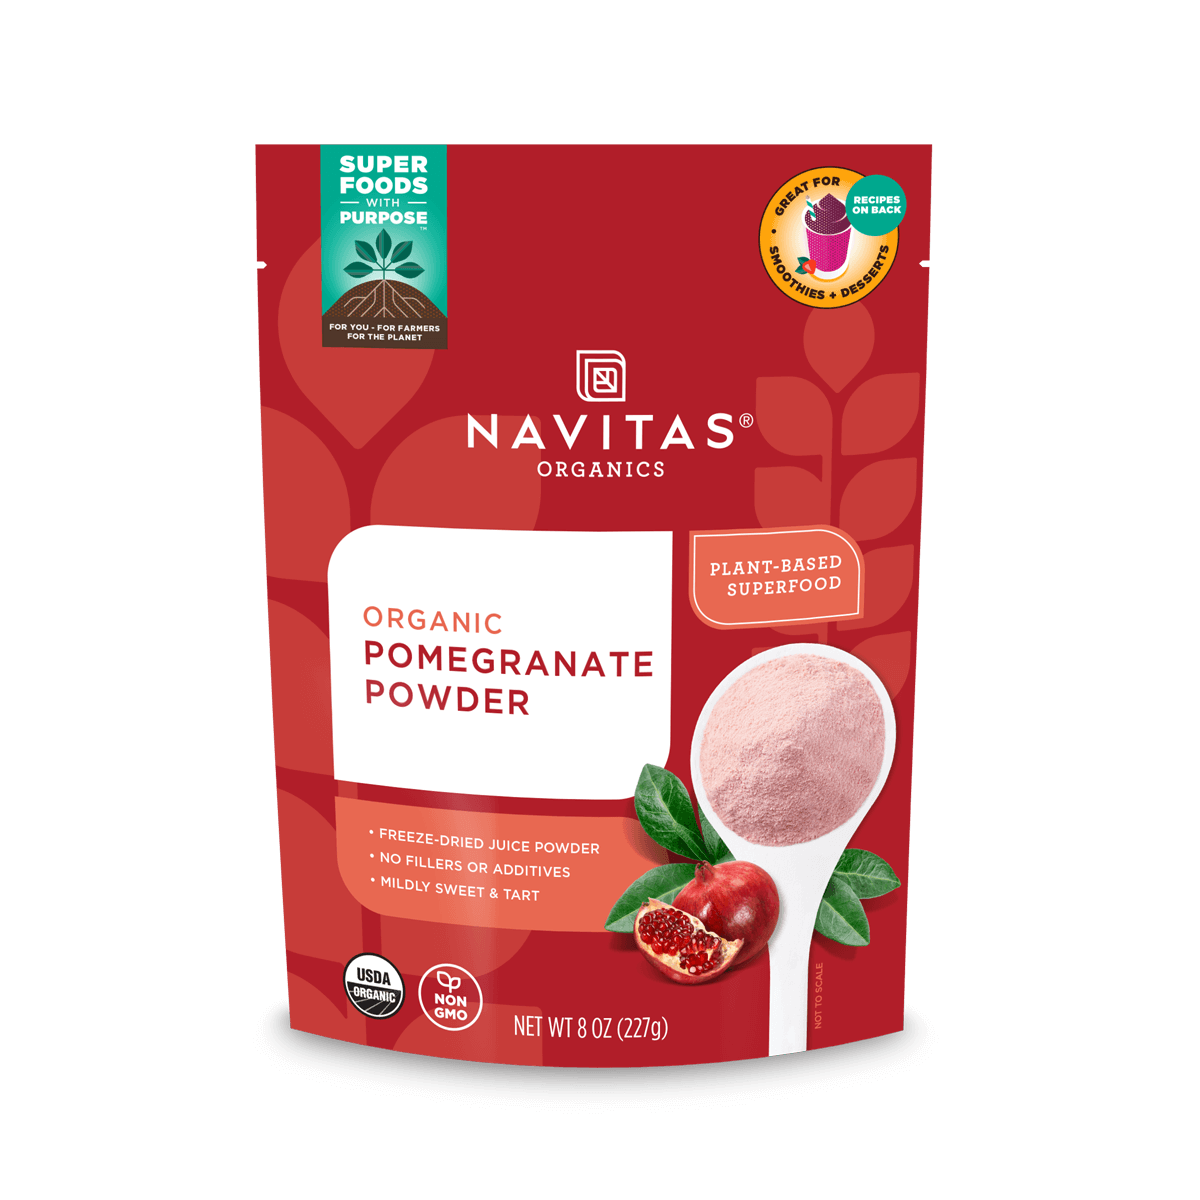 Navitas Organics Pomegranate Powder front of bag